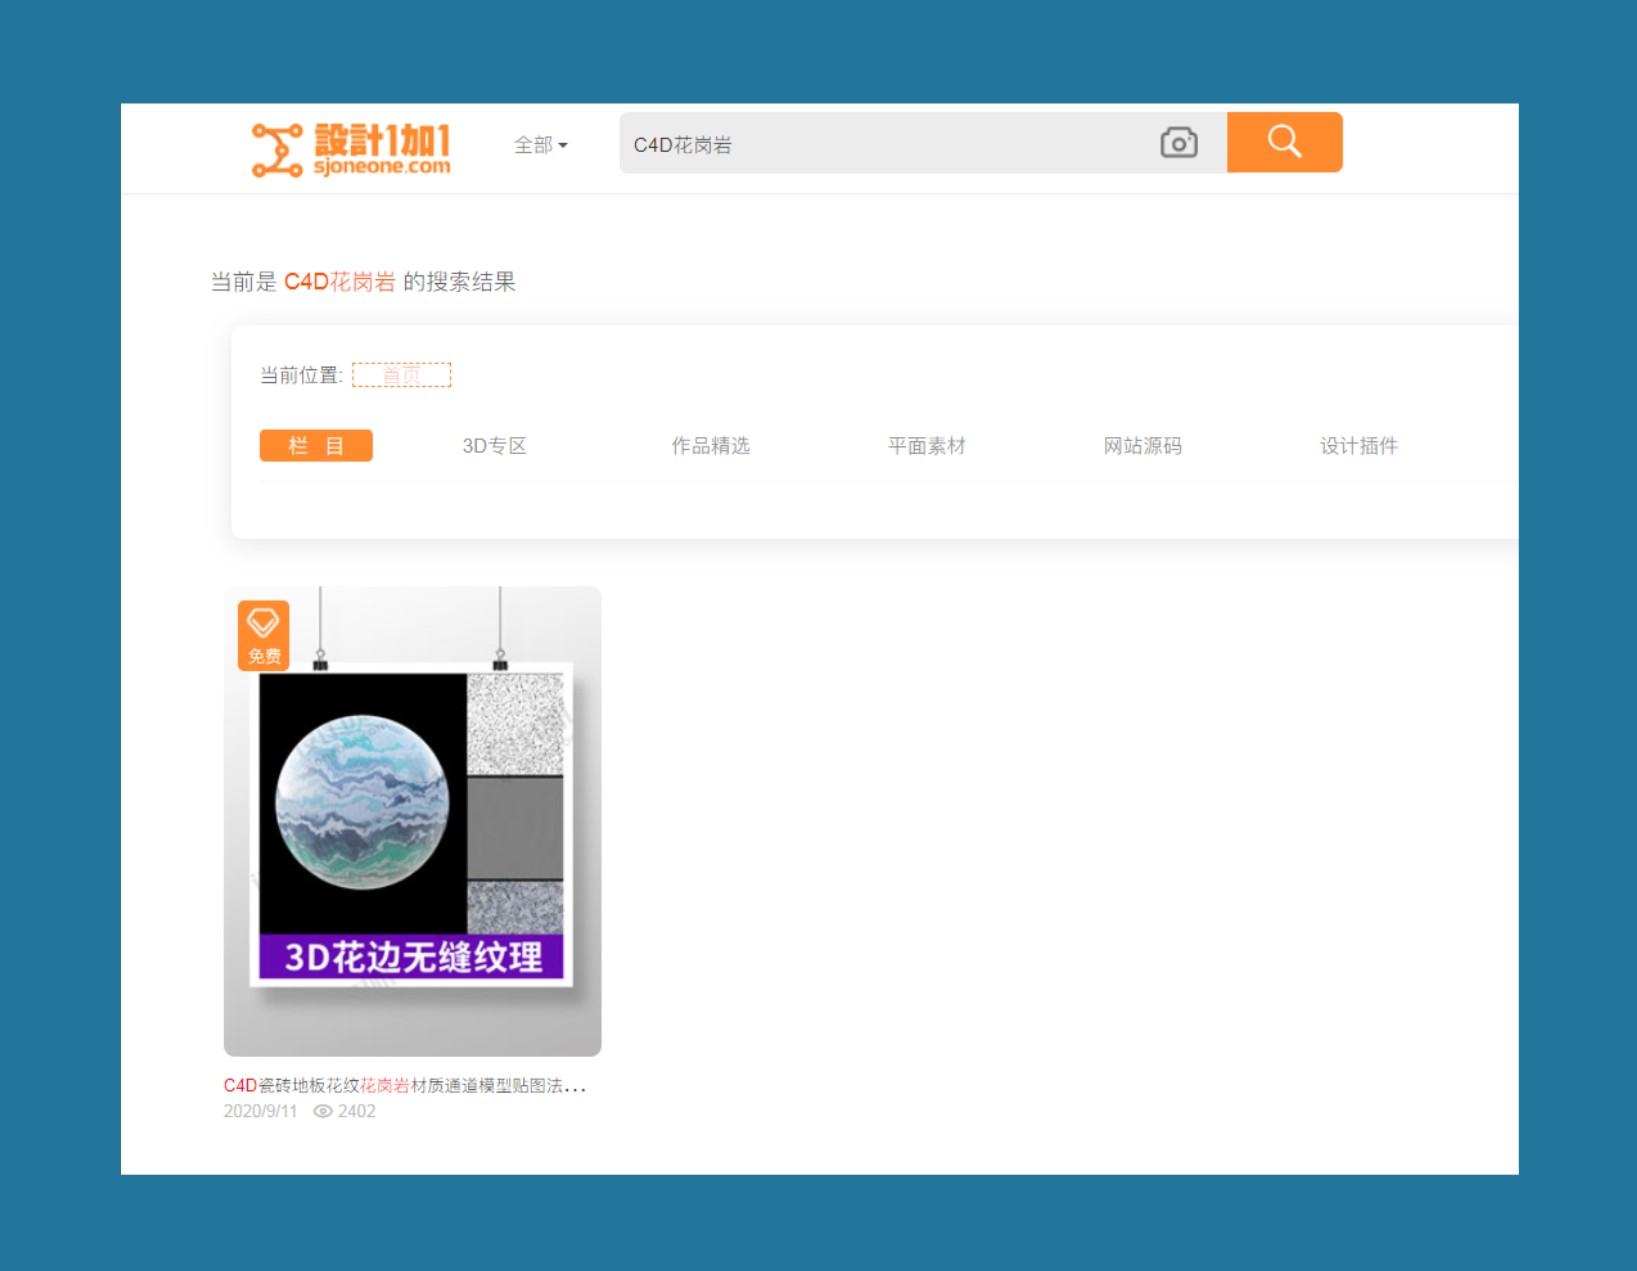 wordpress智能中文搜索系统专业版intsearch，让客户搜索更多相关内容